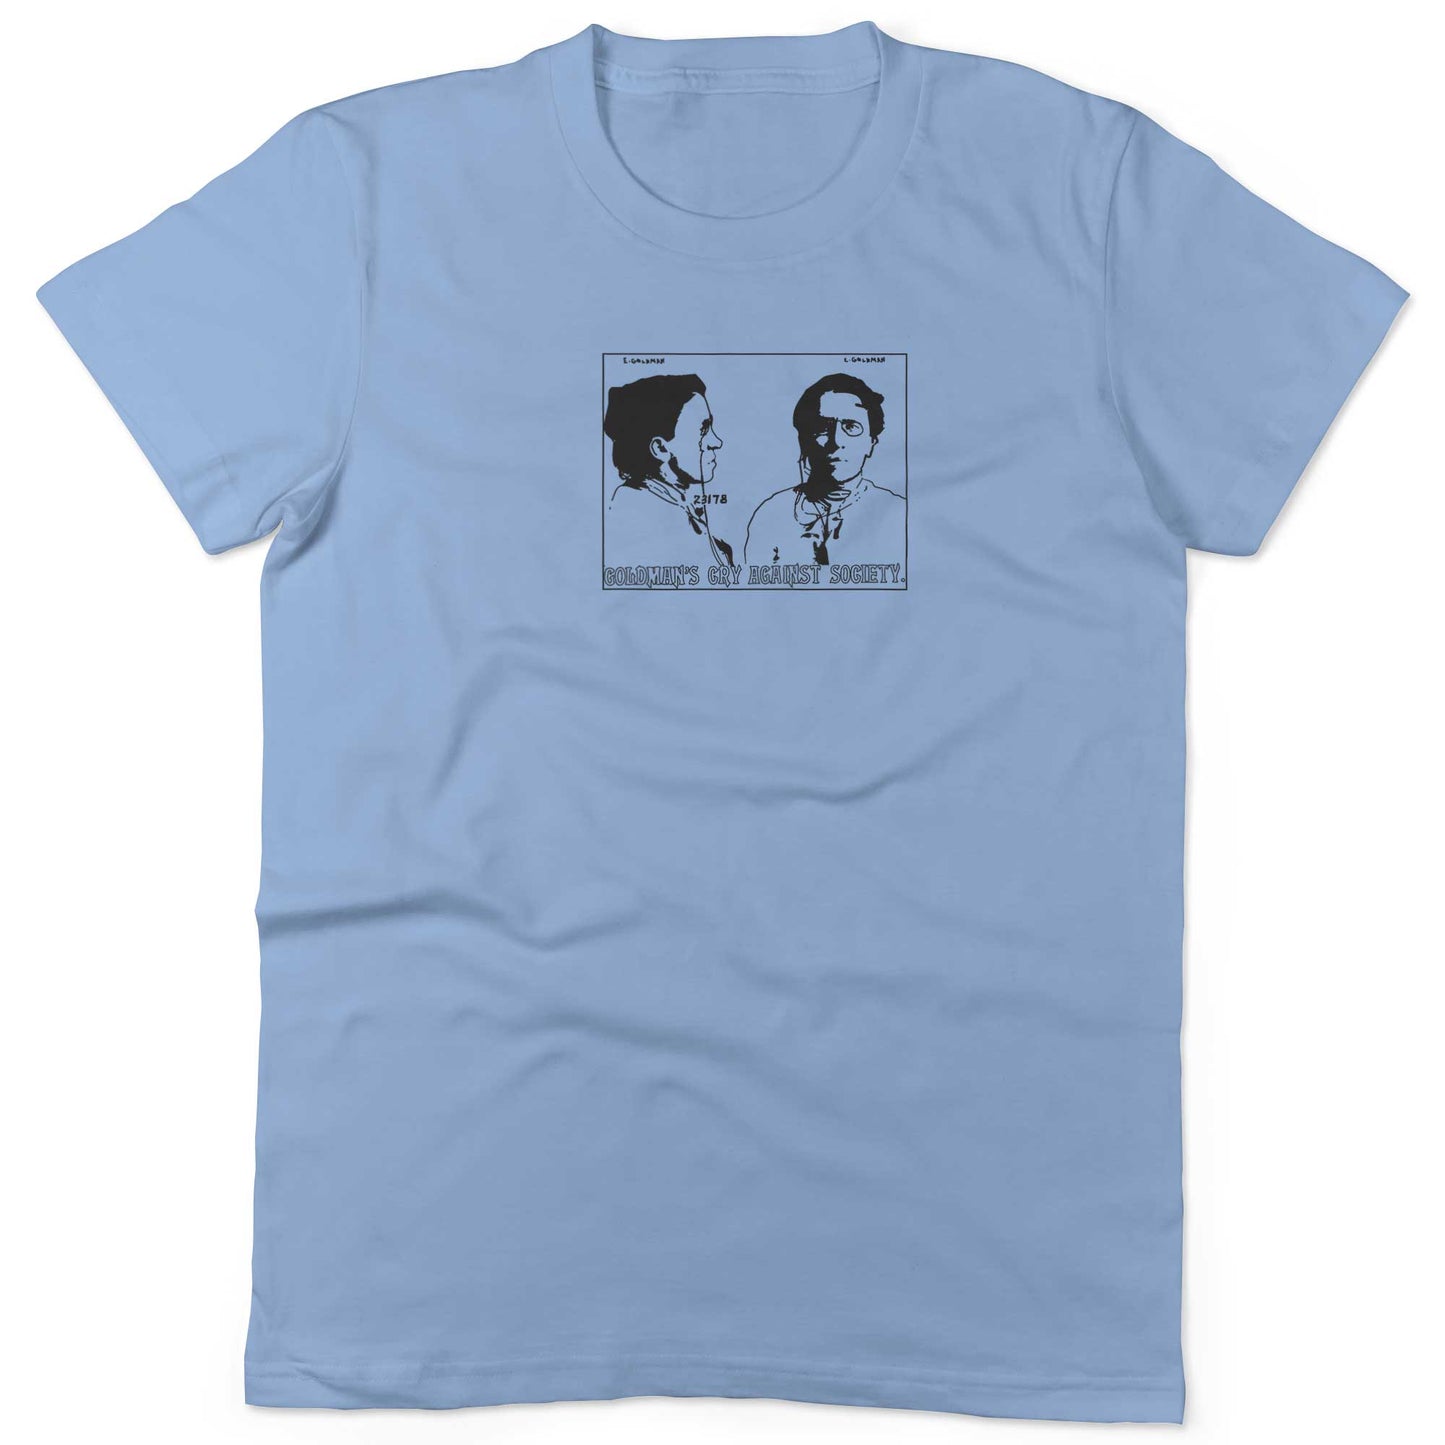 Emma Goldman Unisex Or Women's Cotton T-shirt-Baby Blue-Women